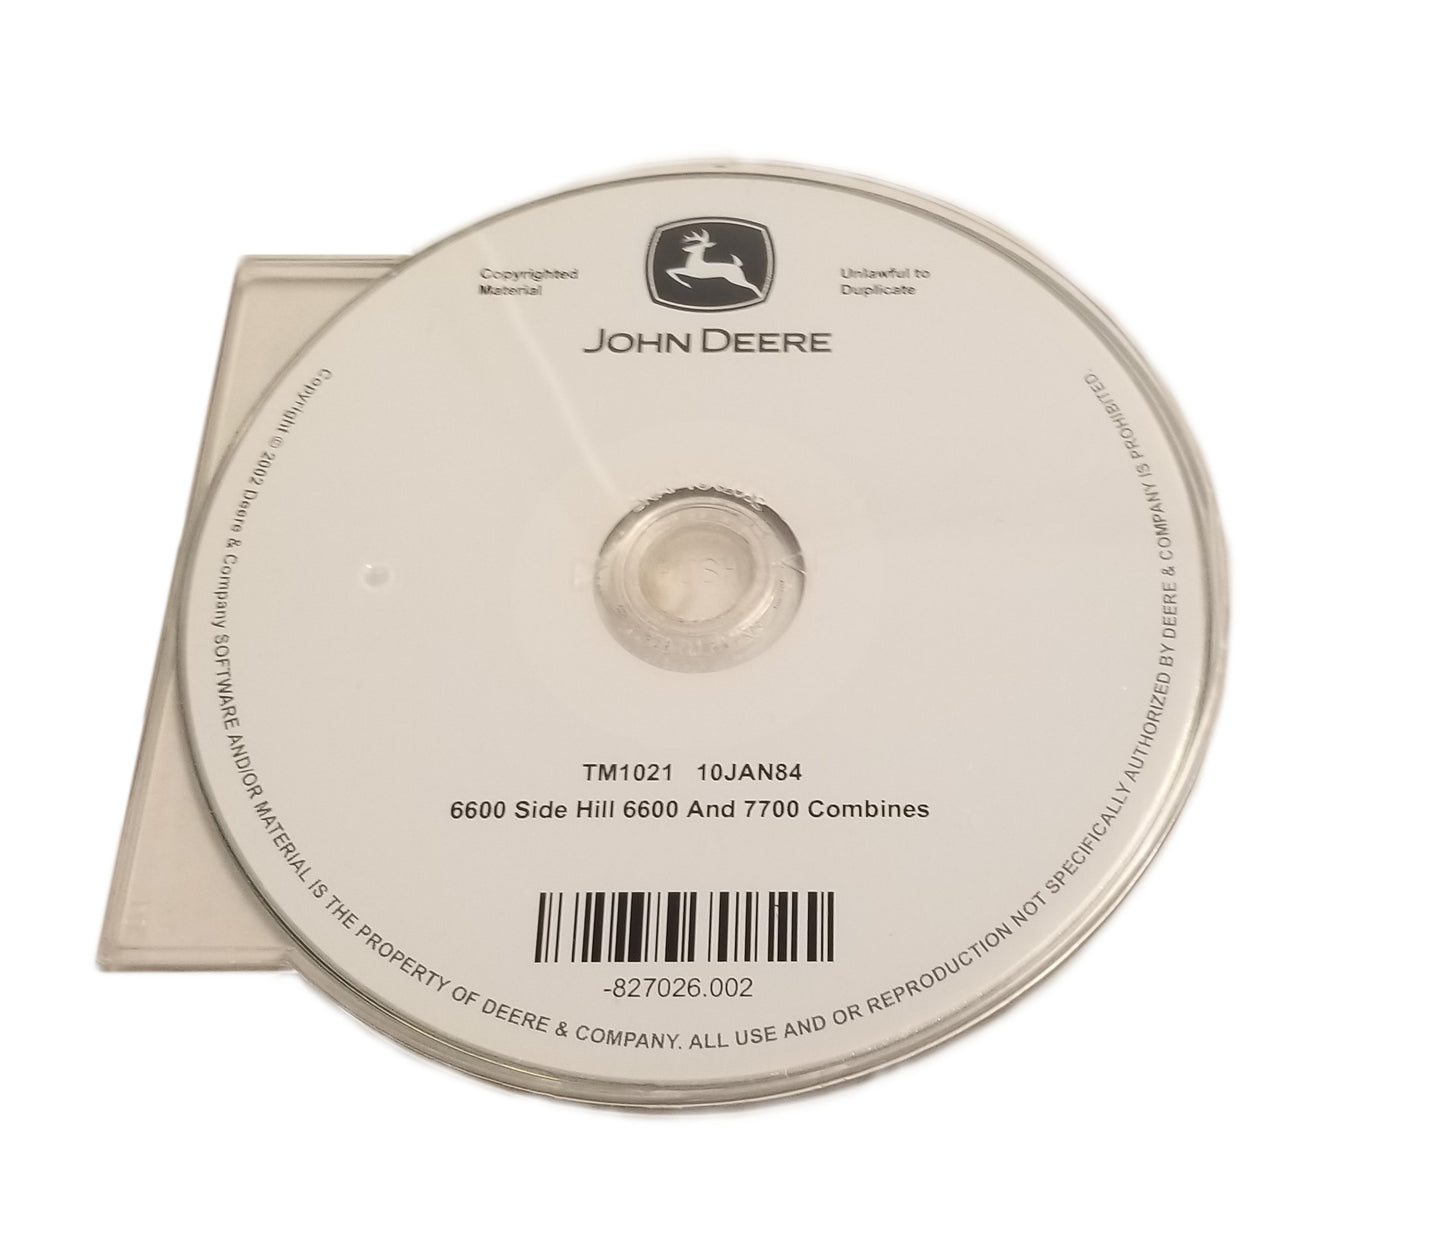 John Deere 6600 Side Hill/6600/7700 Combine Technical Manual CD - TM1021CD